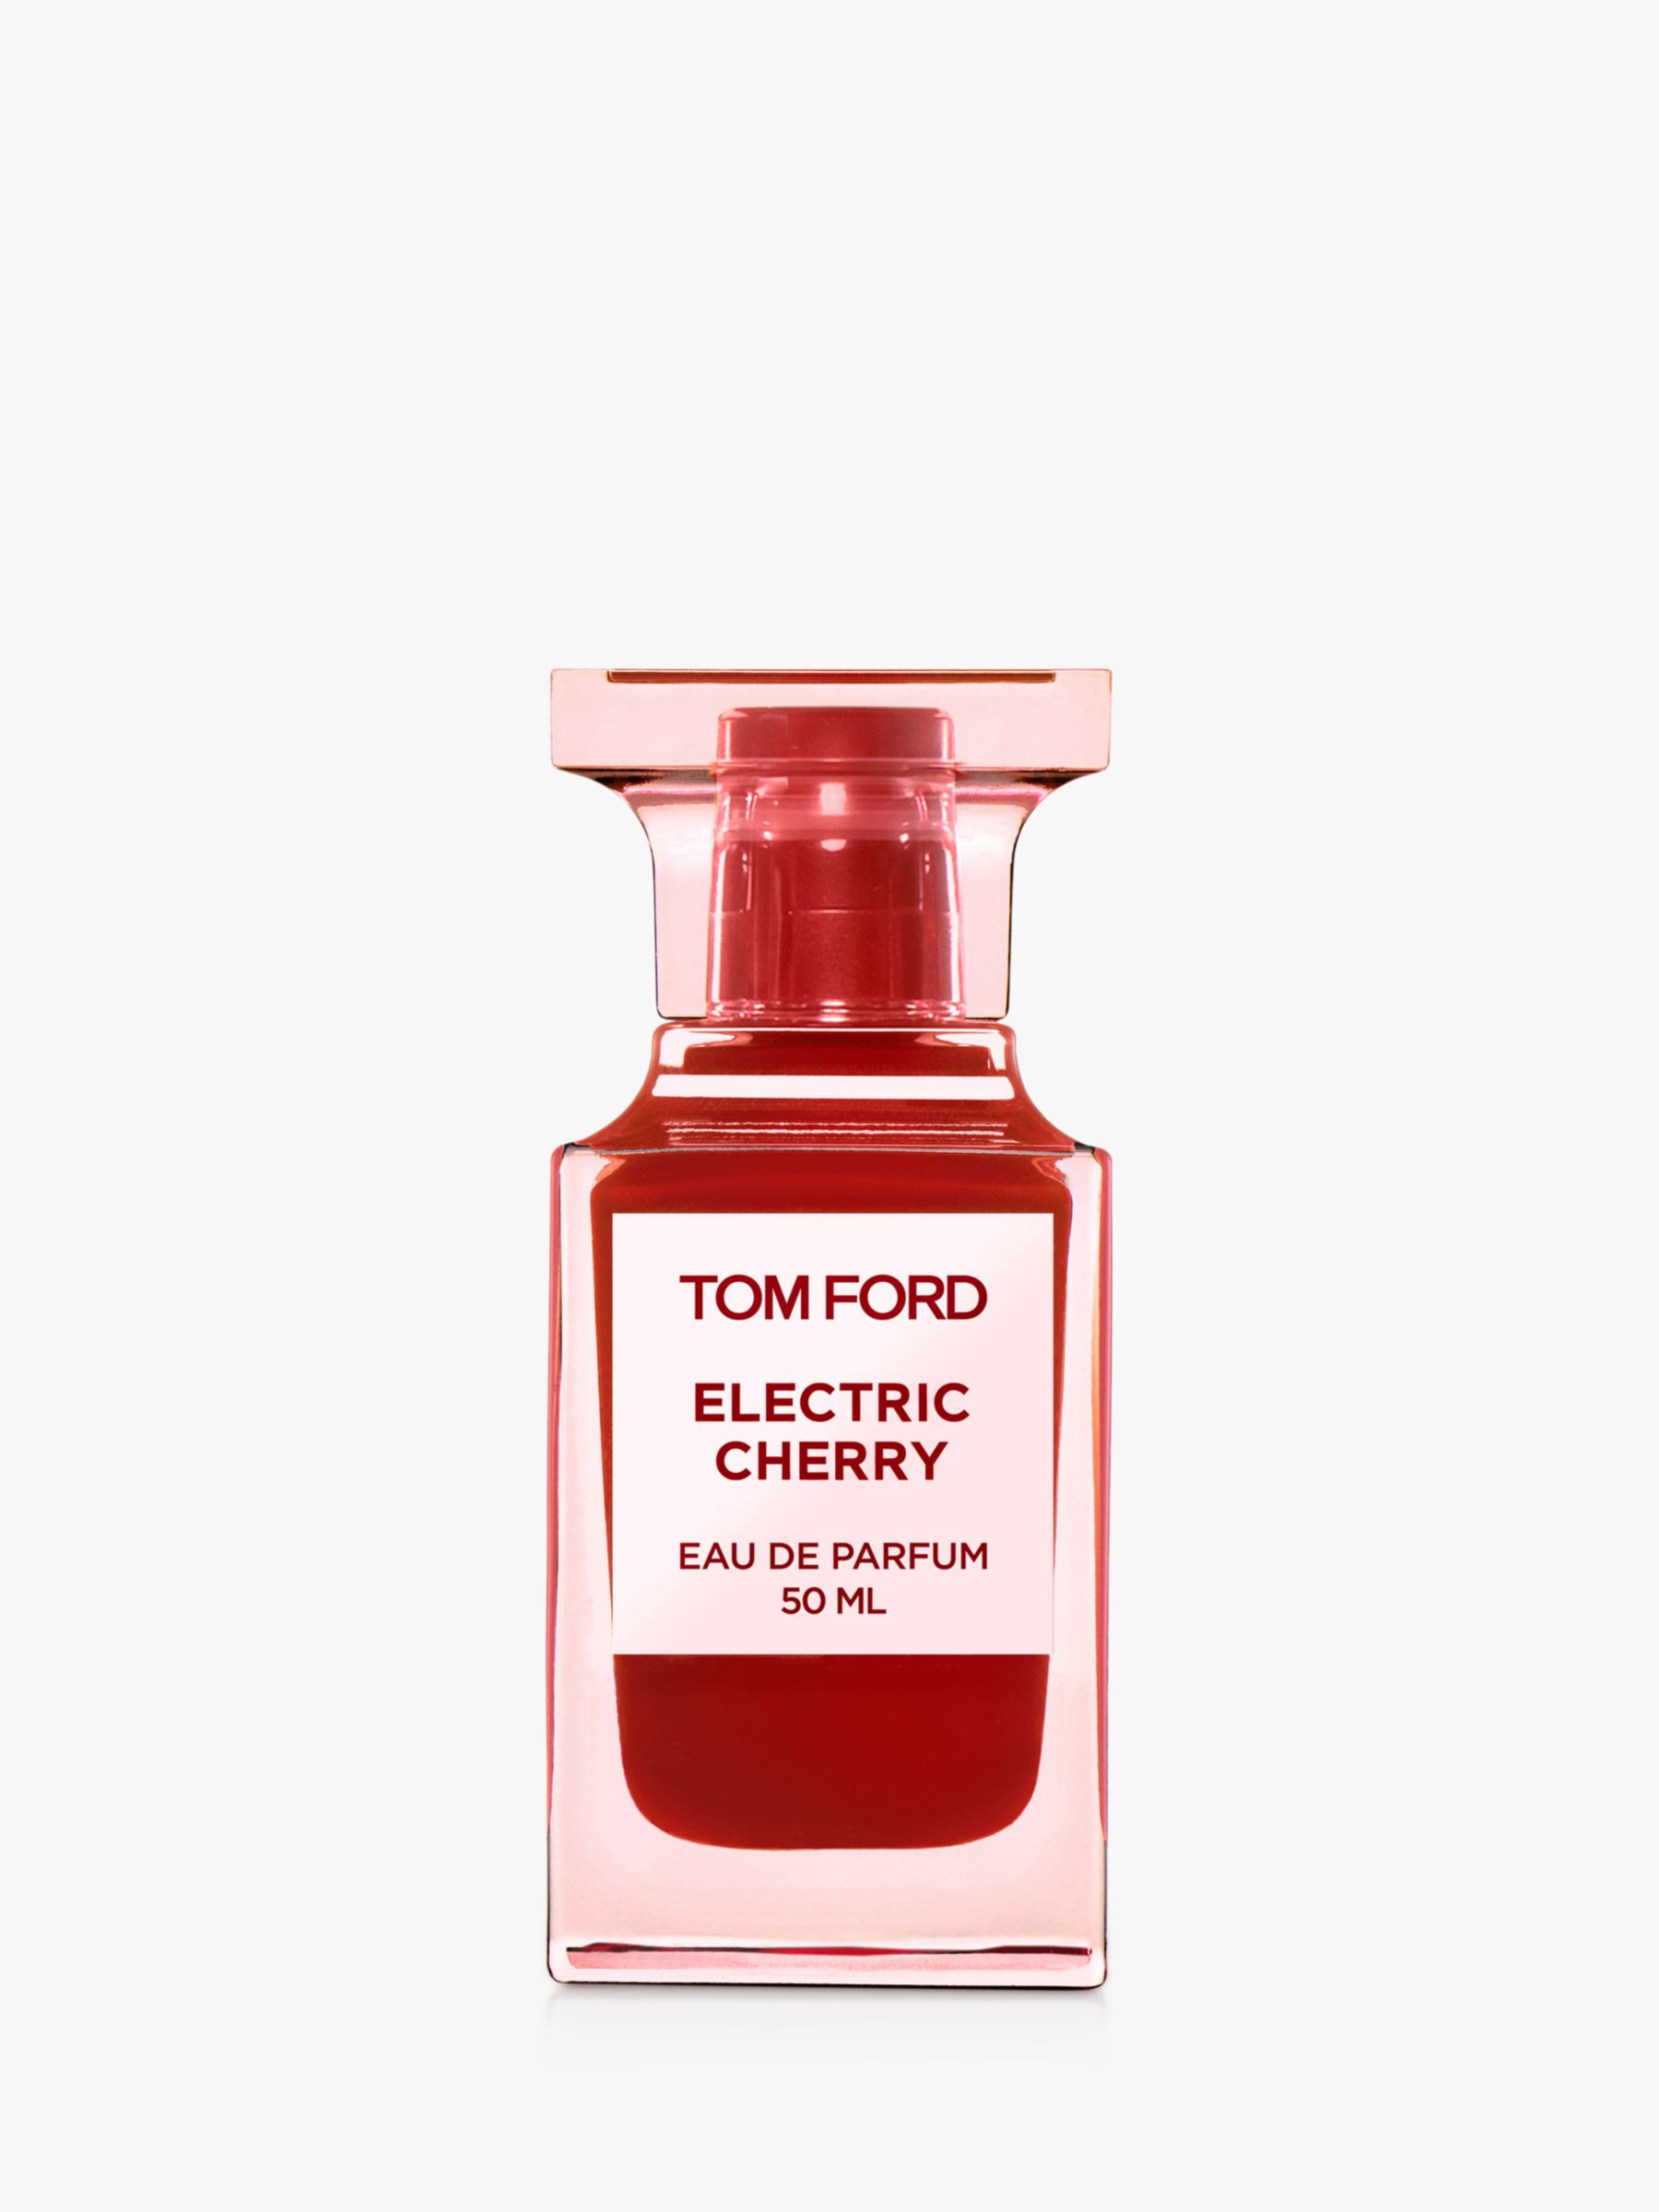 TOM FORD Electric Cherry Eau de Parfum, 50ml